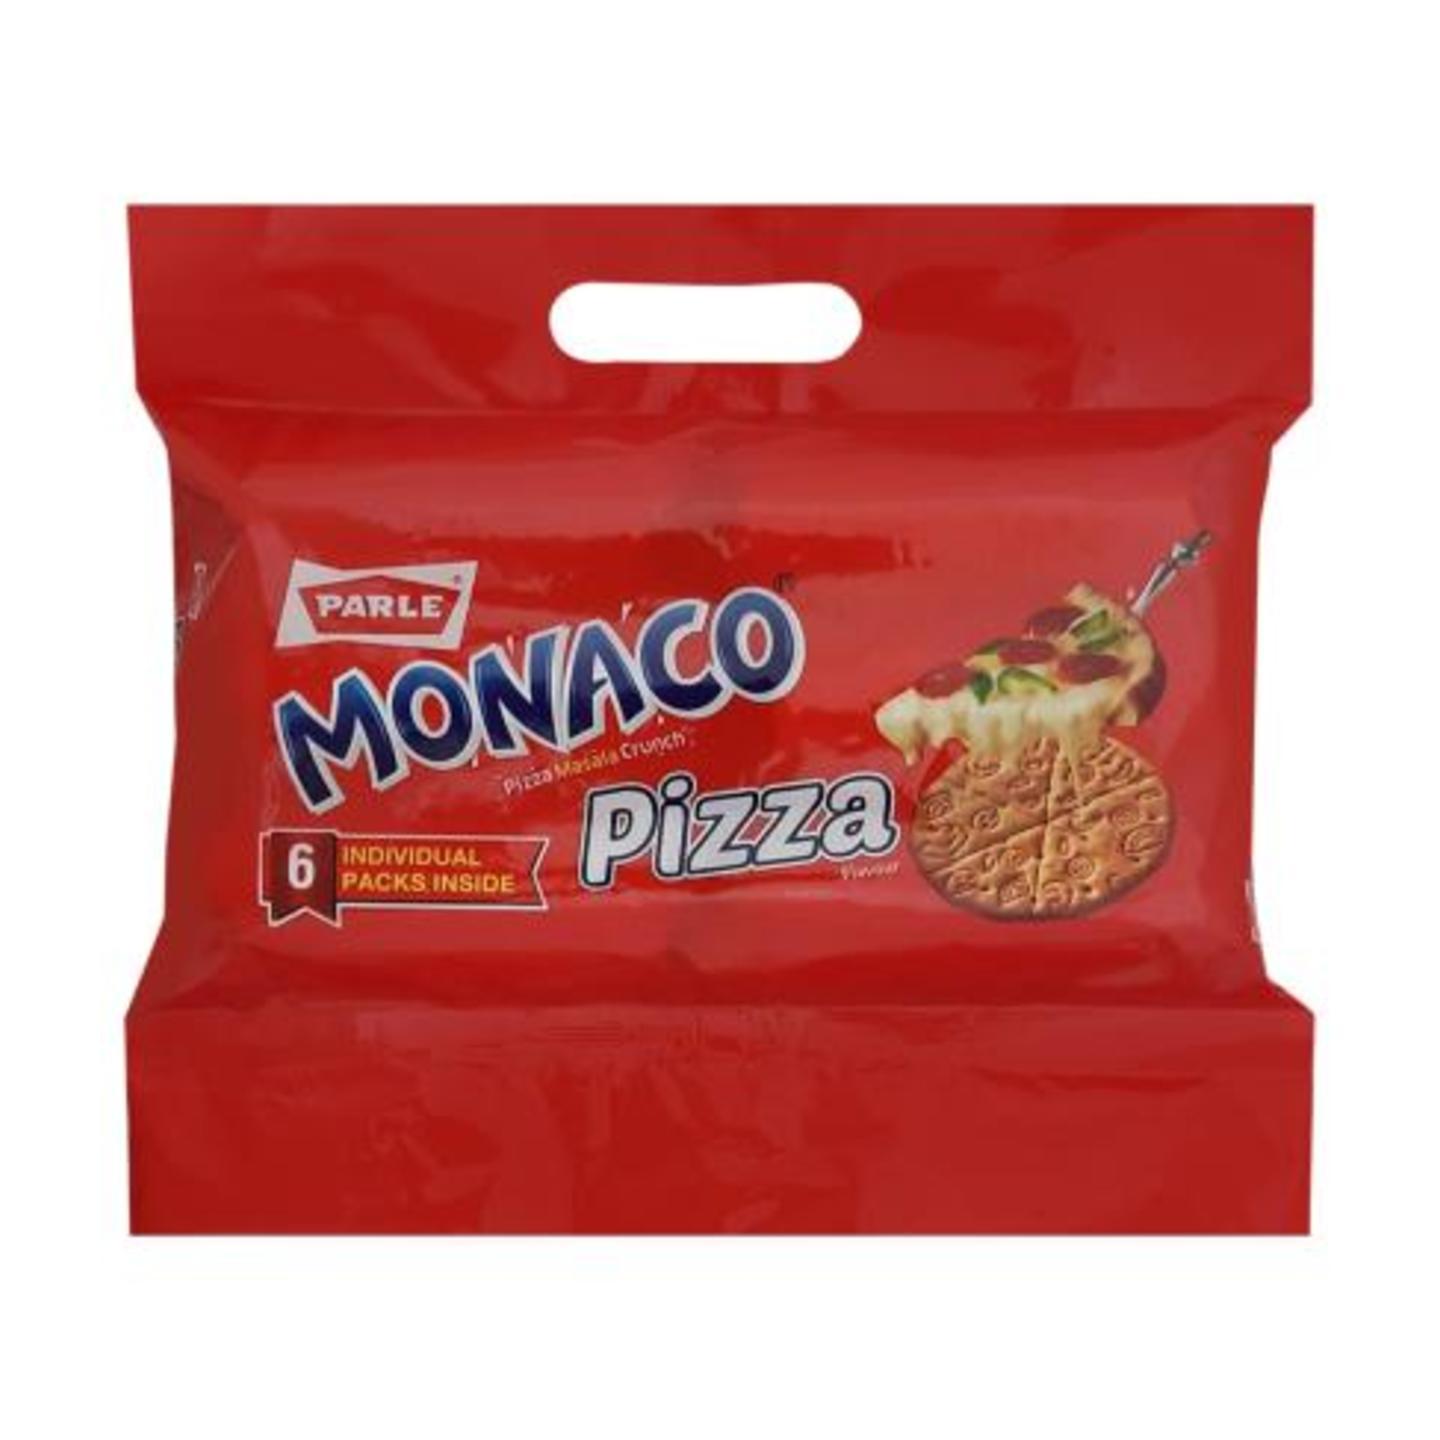 Parle Monaco Pizza Masala Crunch Biscuits 300 g